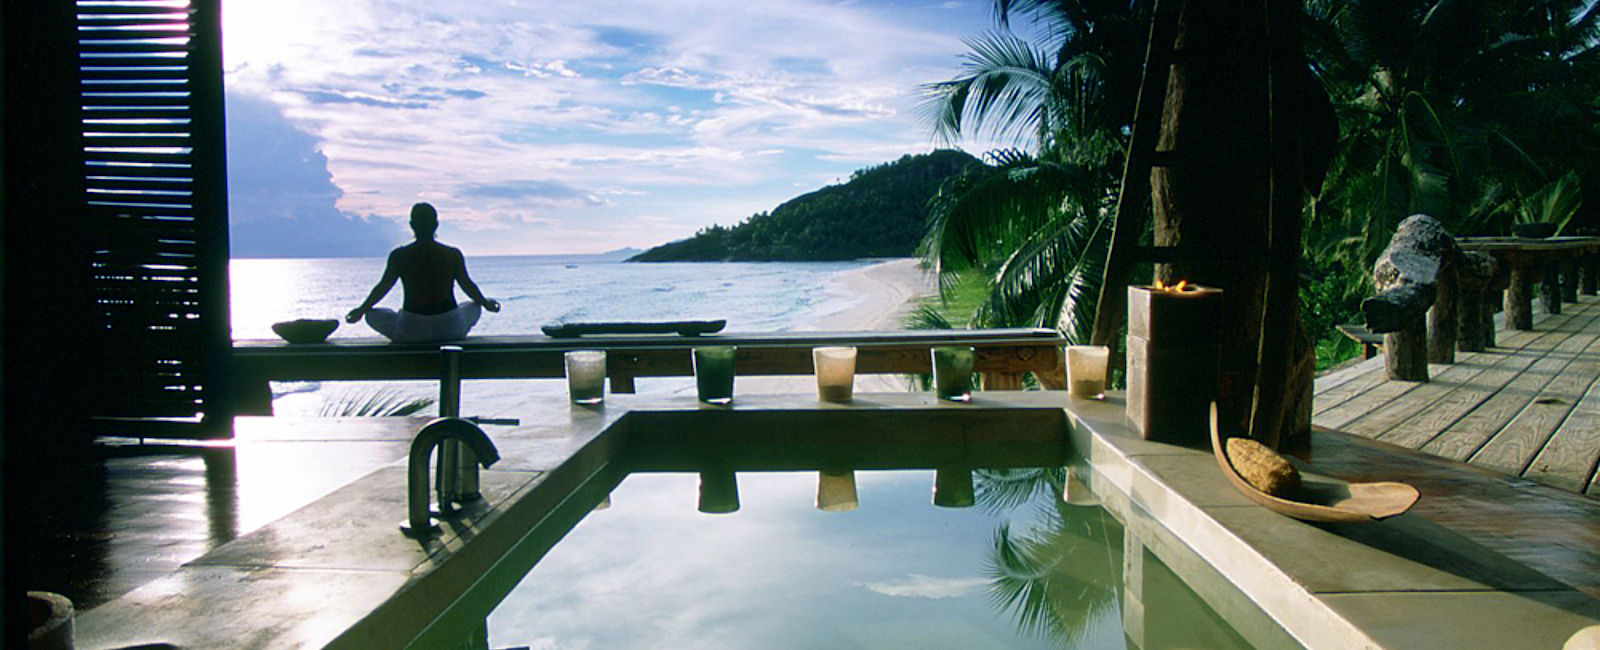 HOTELTEST
 North Island Seychelles 
 Luxus à la Flintstones und Robinson-Crusoe-Charme 